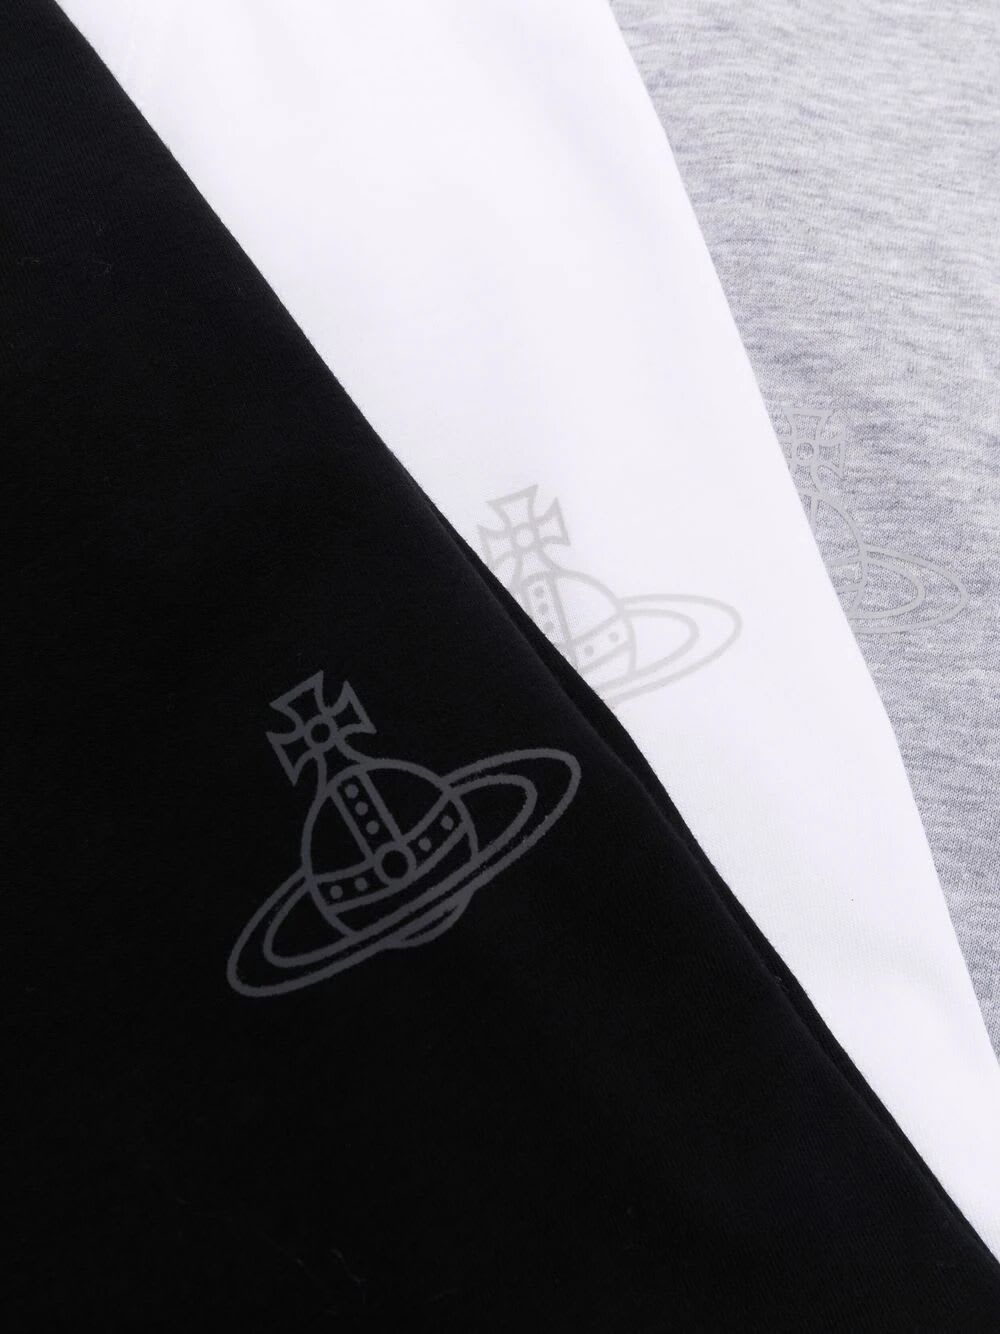 Shop Vivienne Westwood Three Pack T-shirt In White Black Grey